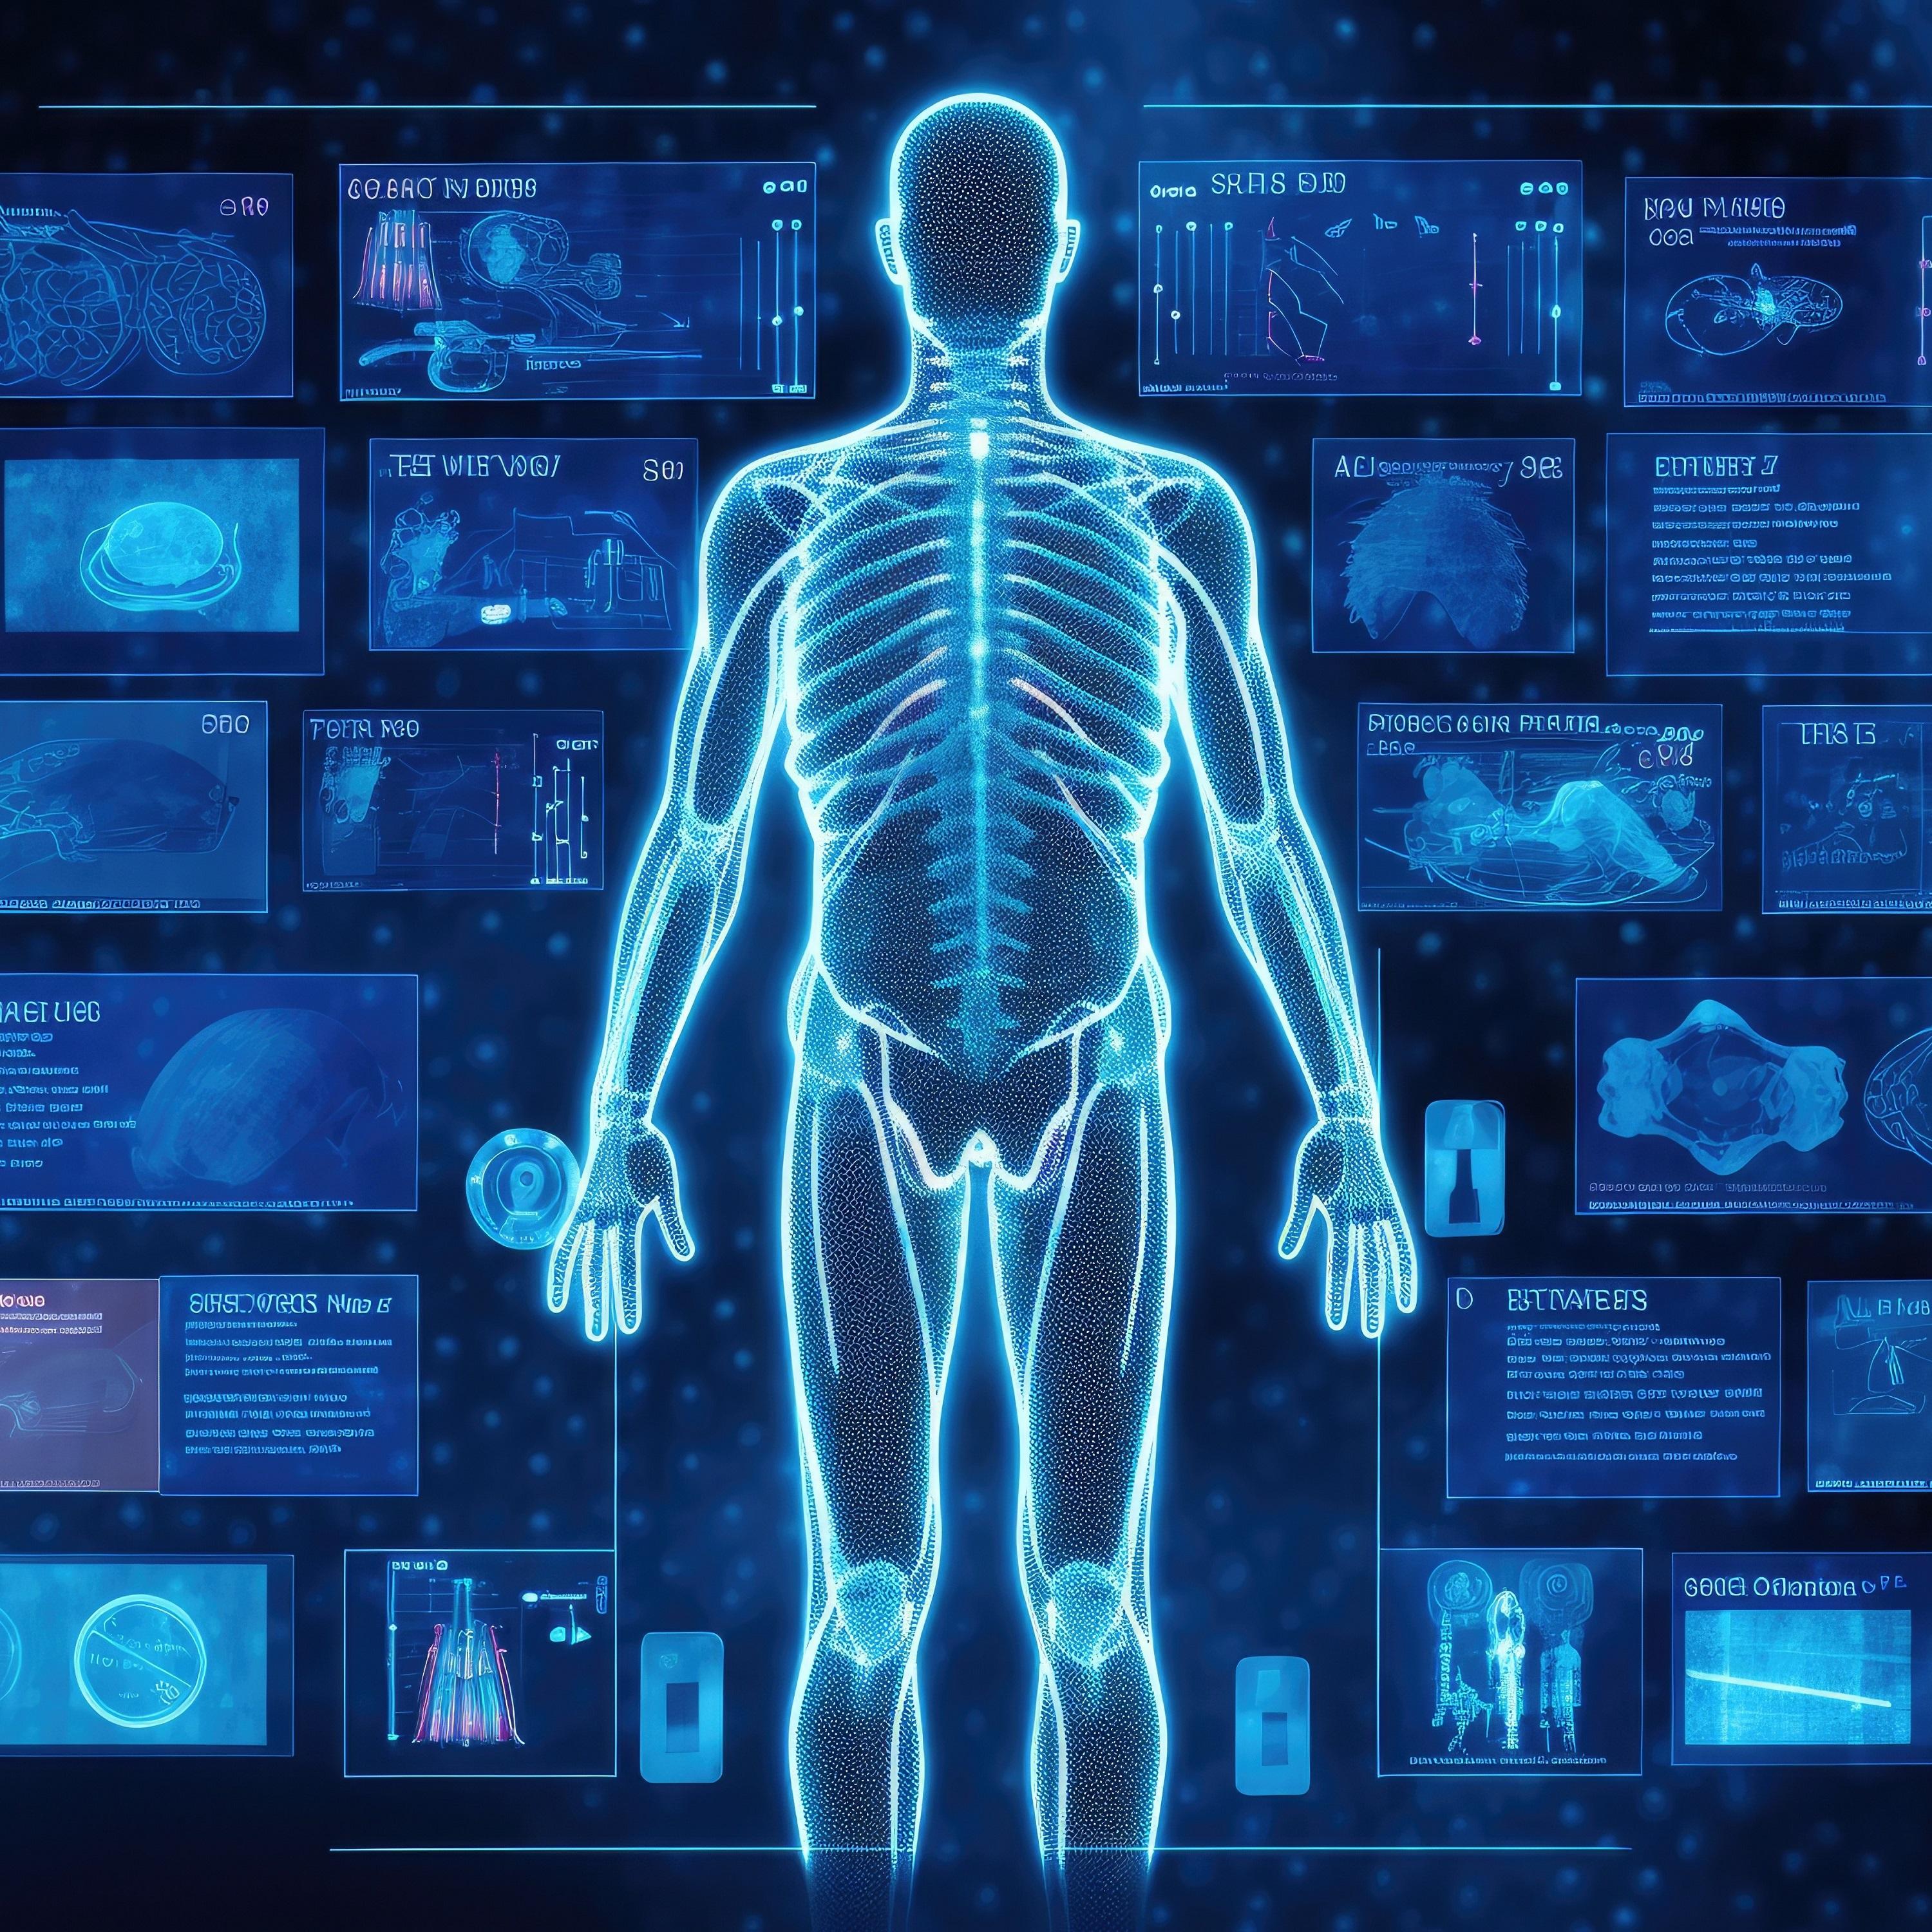 Thumbnail for "S4:E6 AI & Healthcare: The Next Frontier".